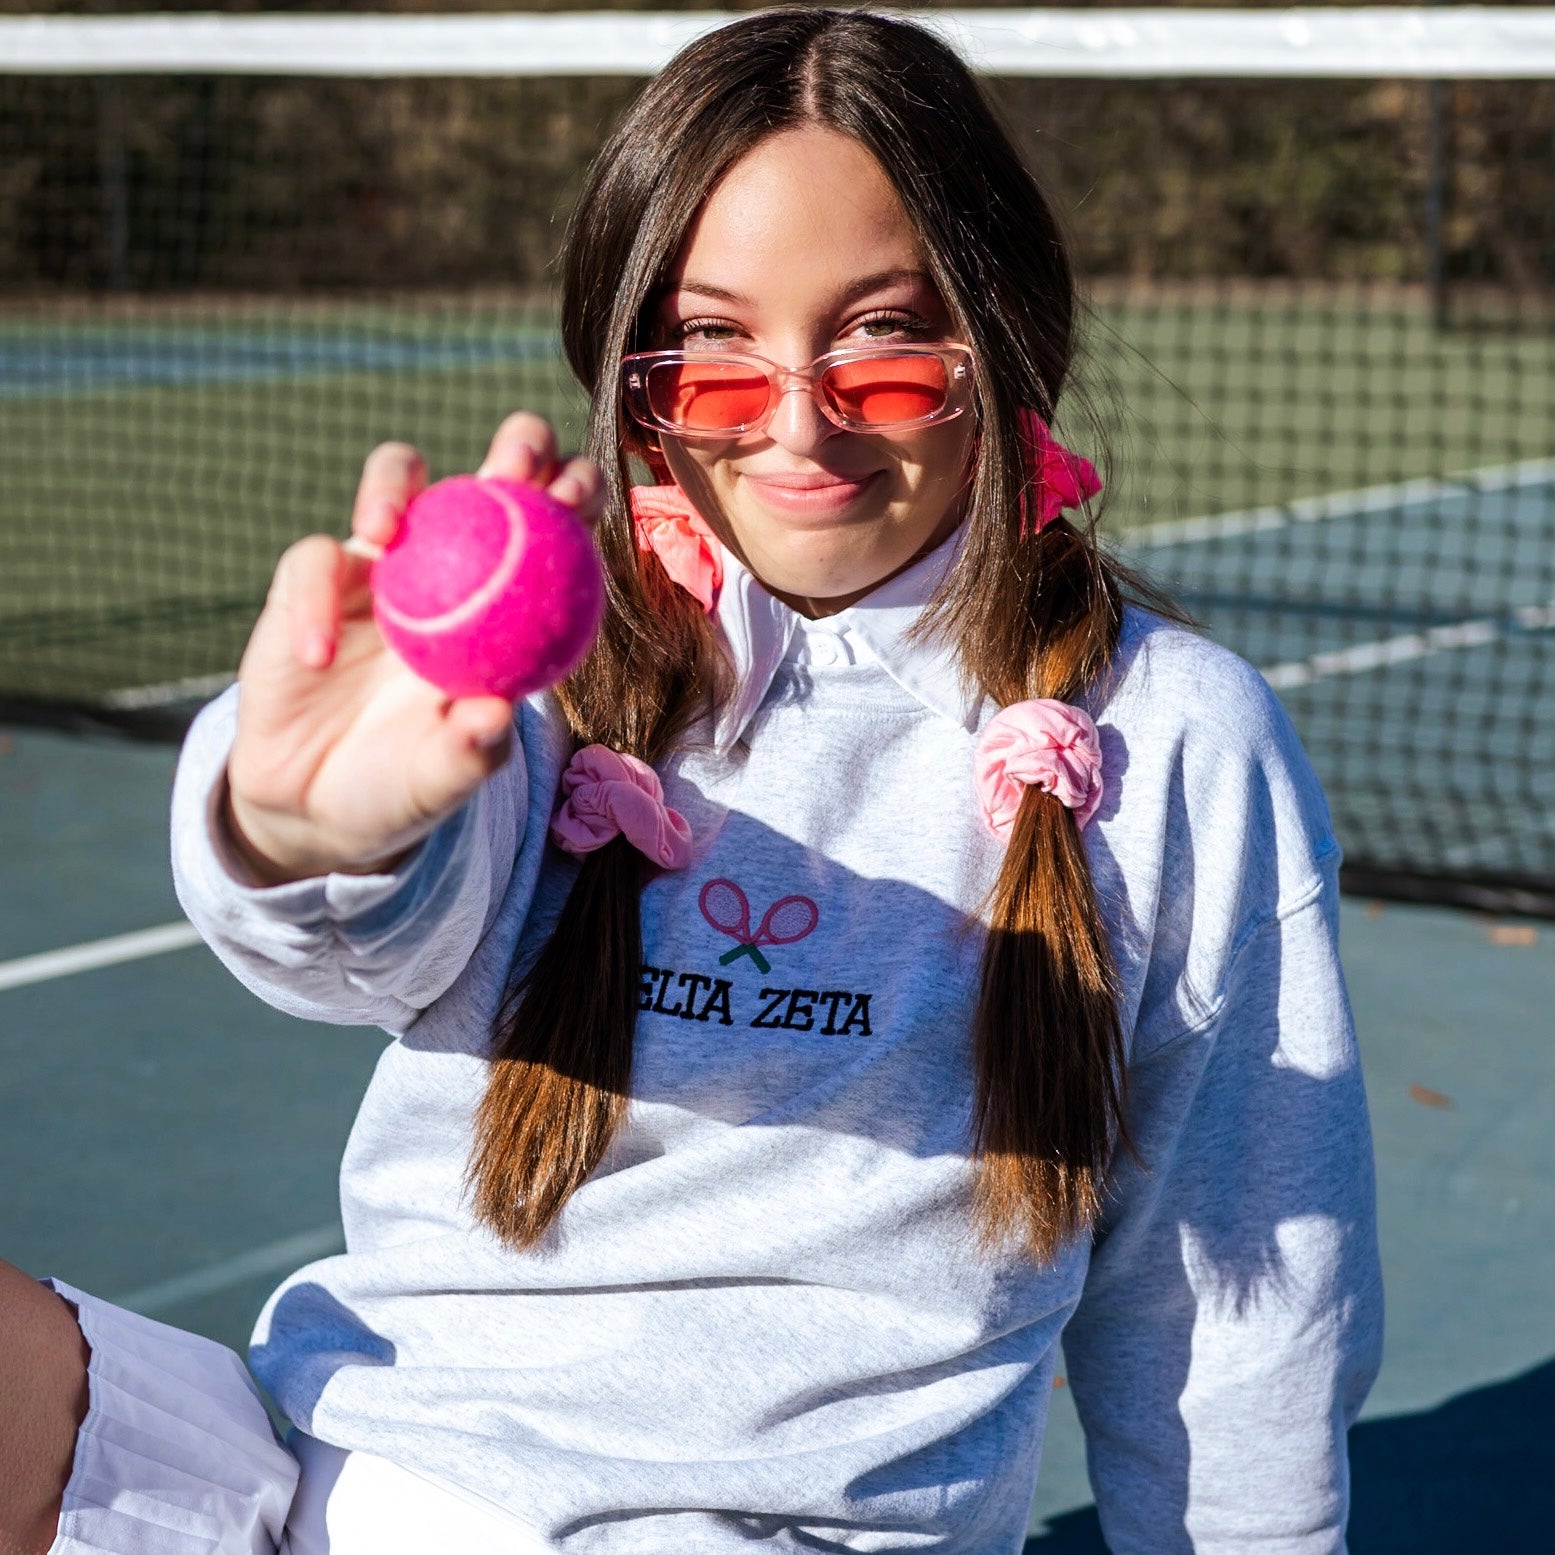 Tennis Academy Embroidered Crewneck Sweatshirt